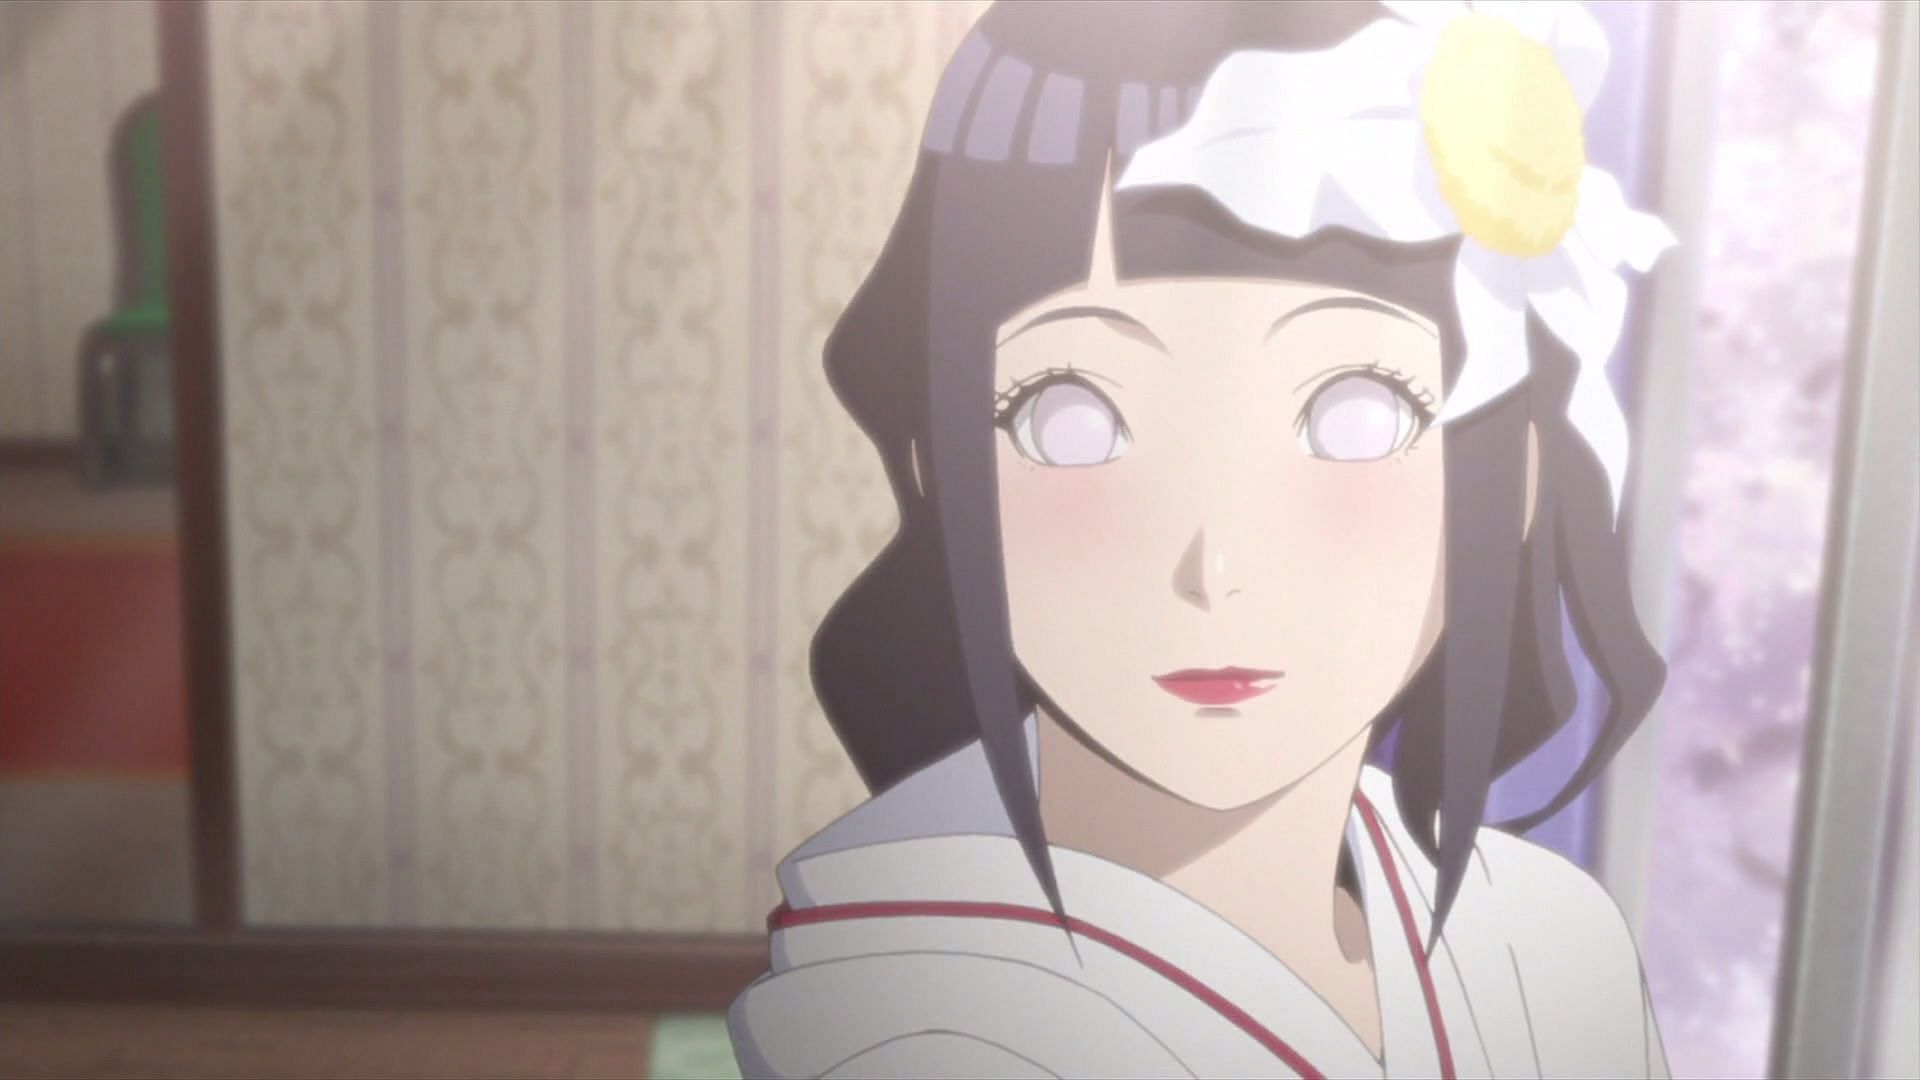 Hinata, as seen in Naruto (Image via Studio Pierrot)